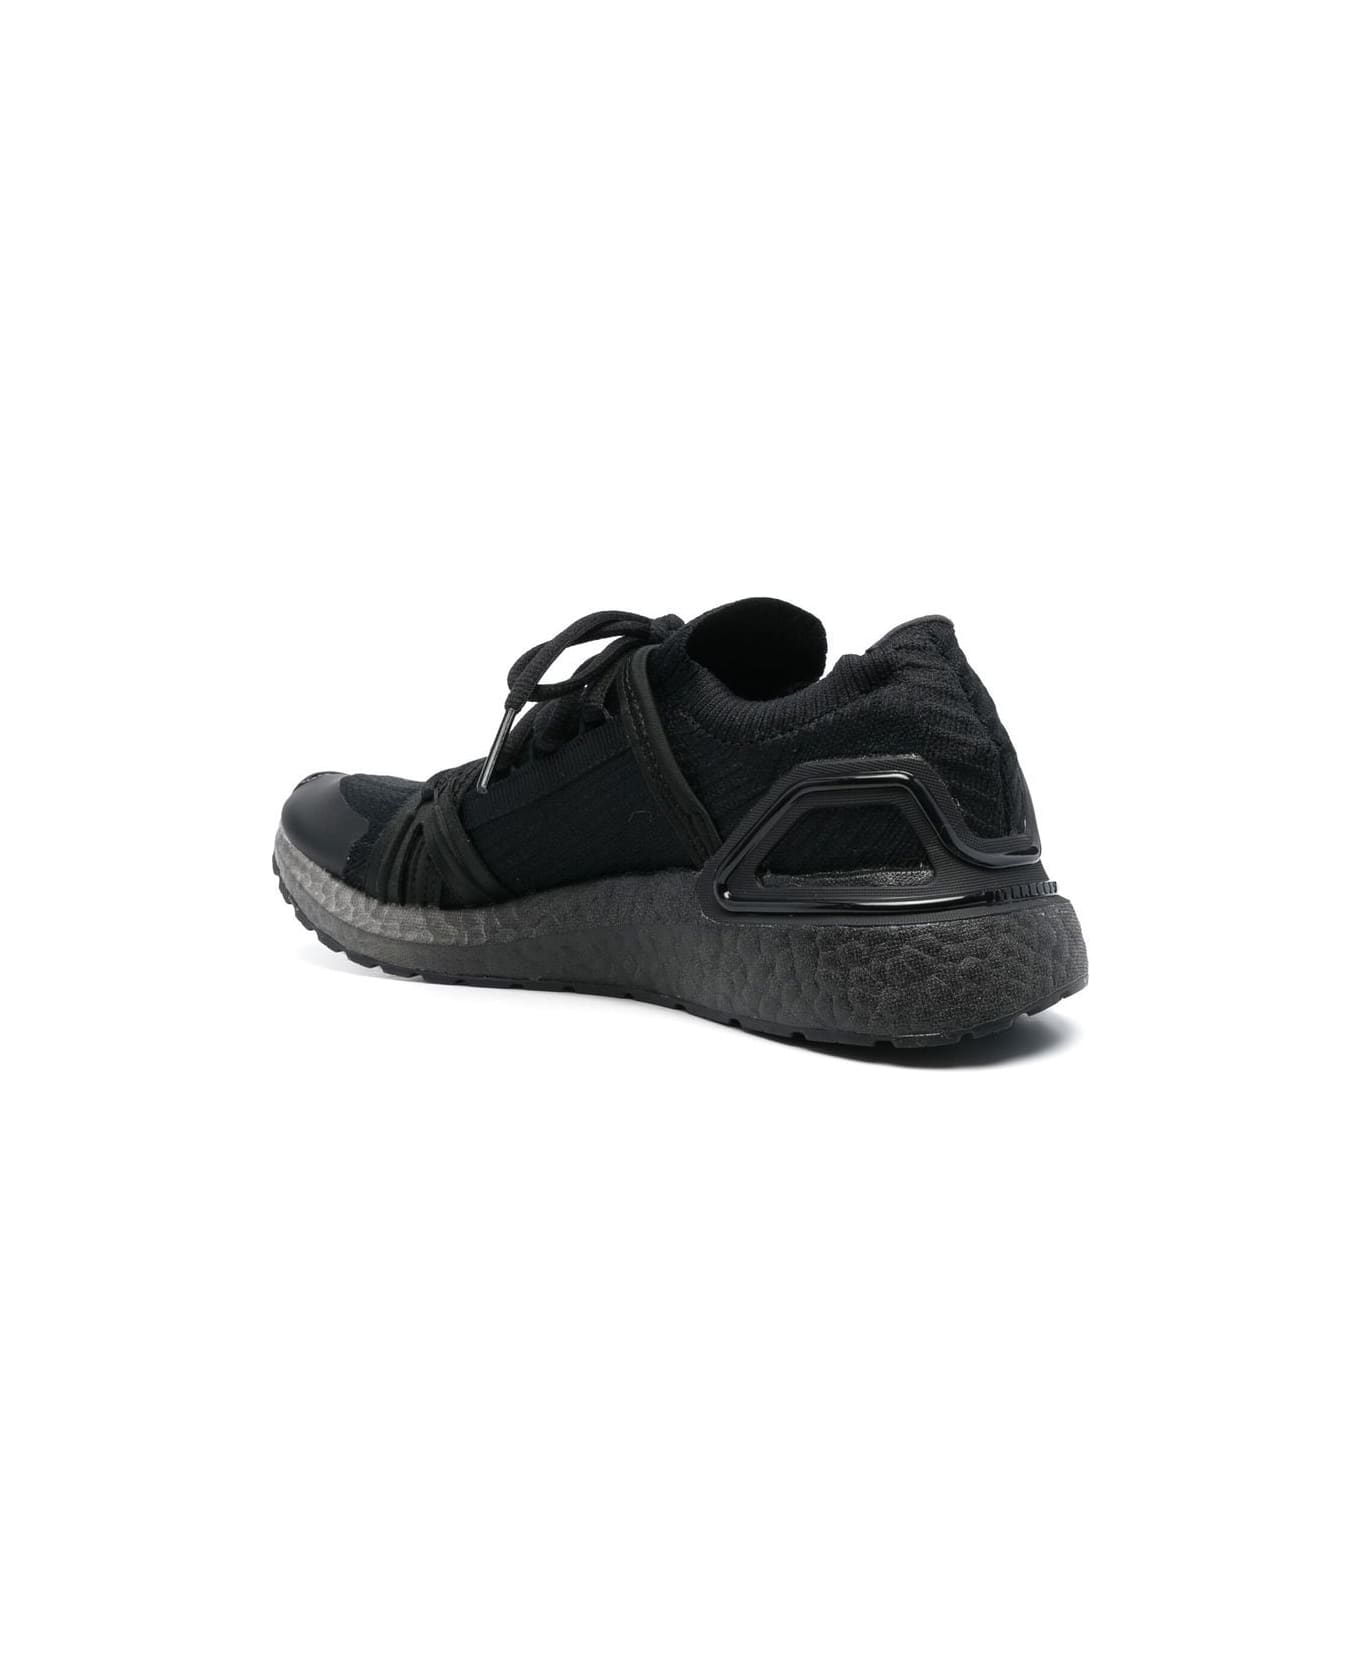 Adidas by Stella McCartney Asmc Ultraboost 20 Sneakers - Cblack Cblack Cblack スニーカー